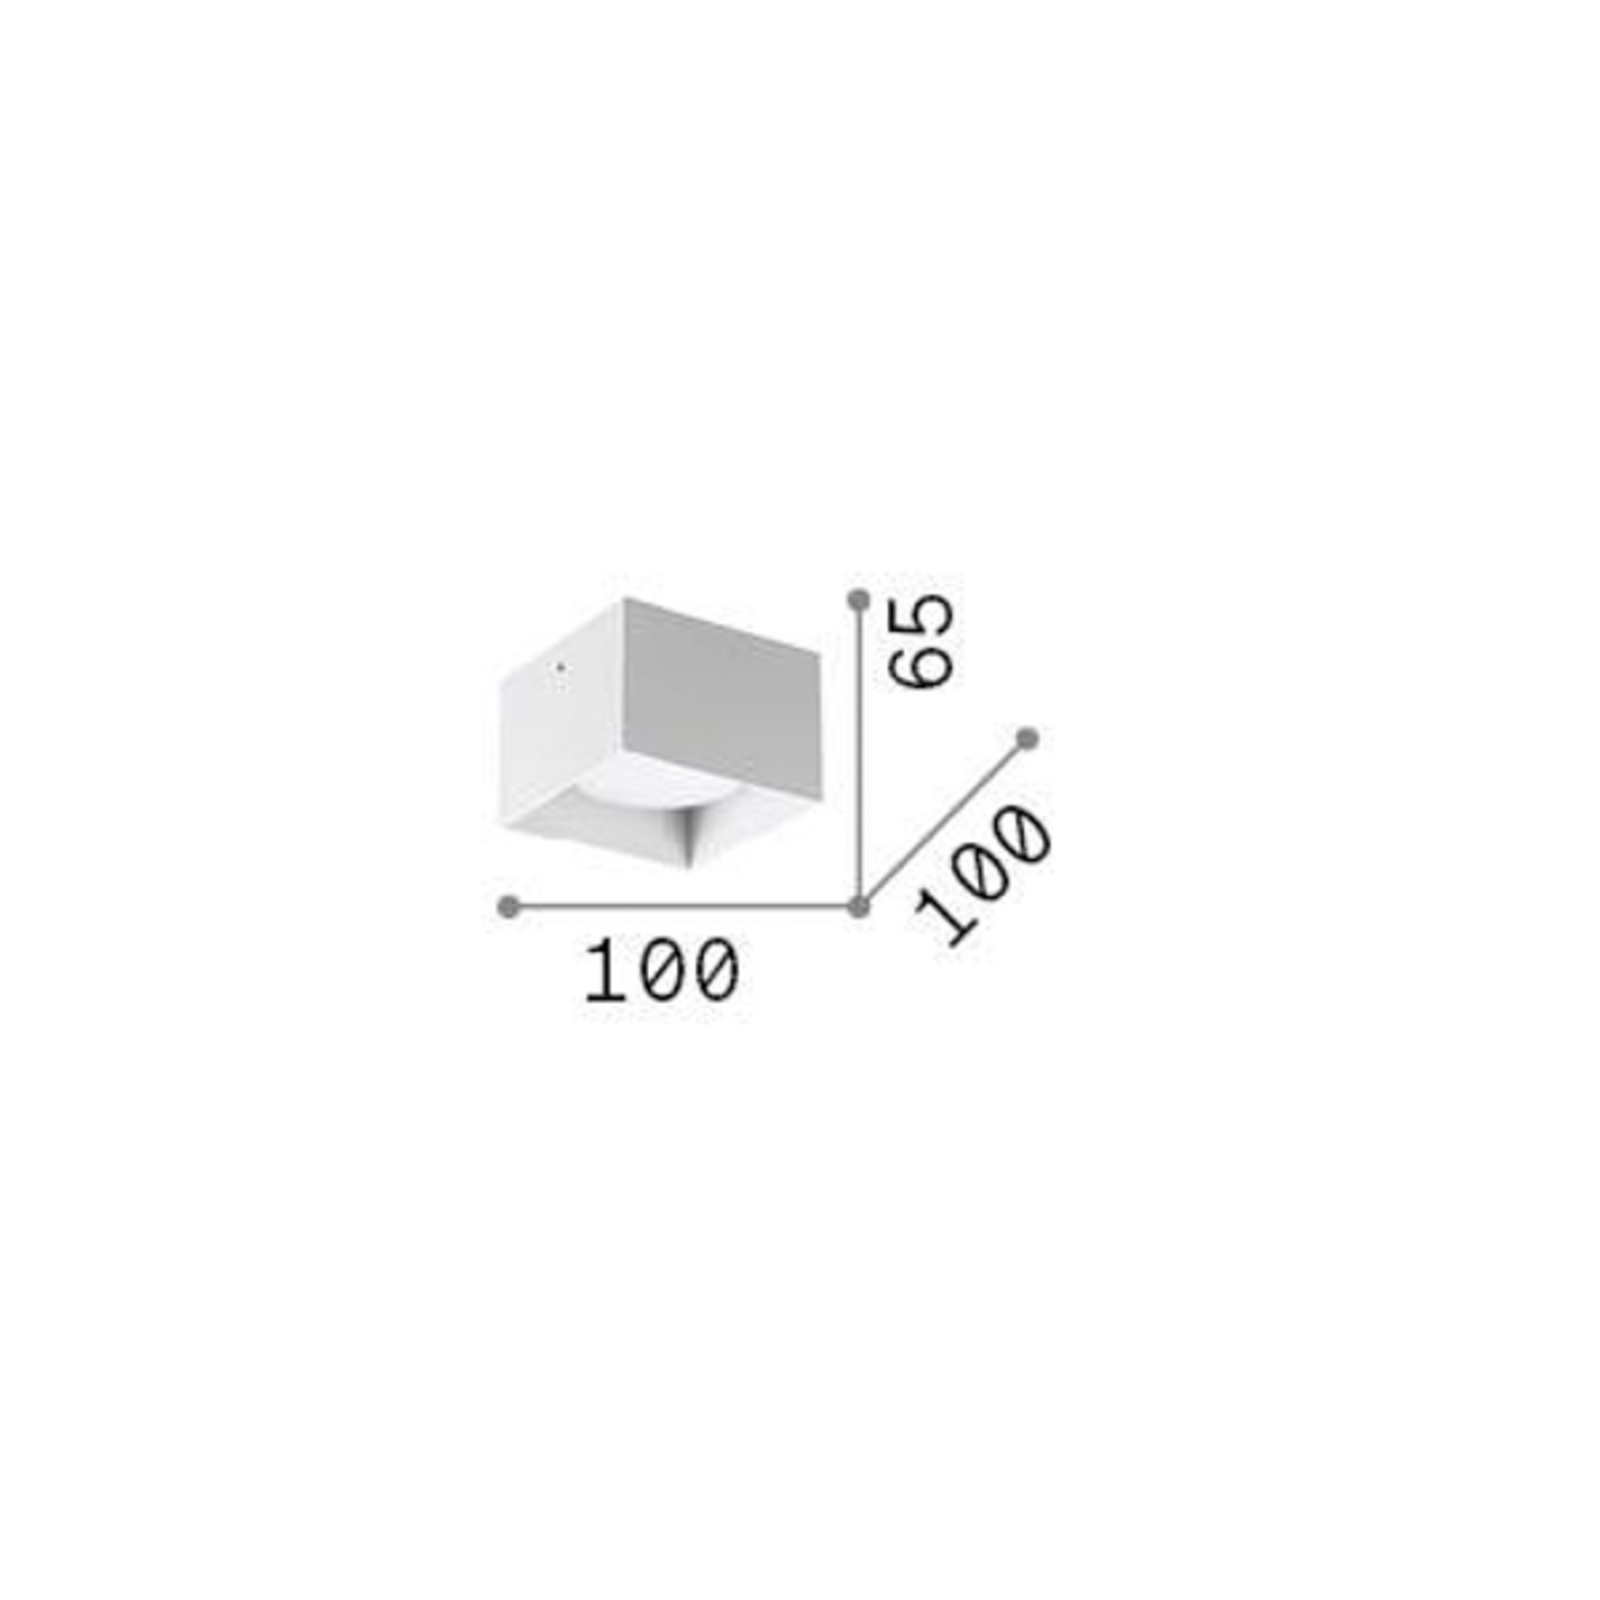 Ideal Lux Downlight Spike Square, weiß, Alu, 10 x 10 cm